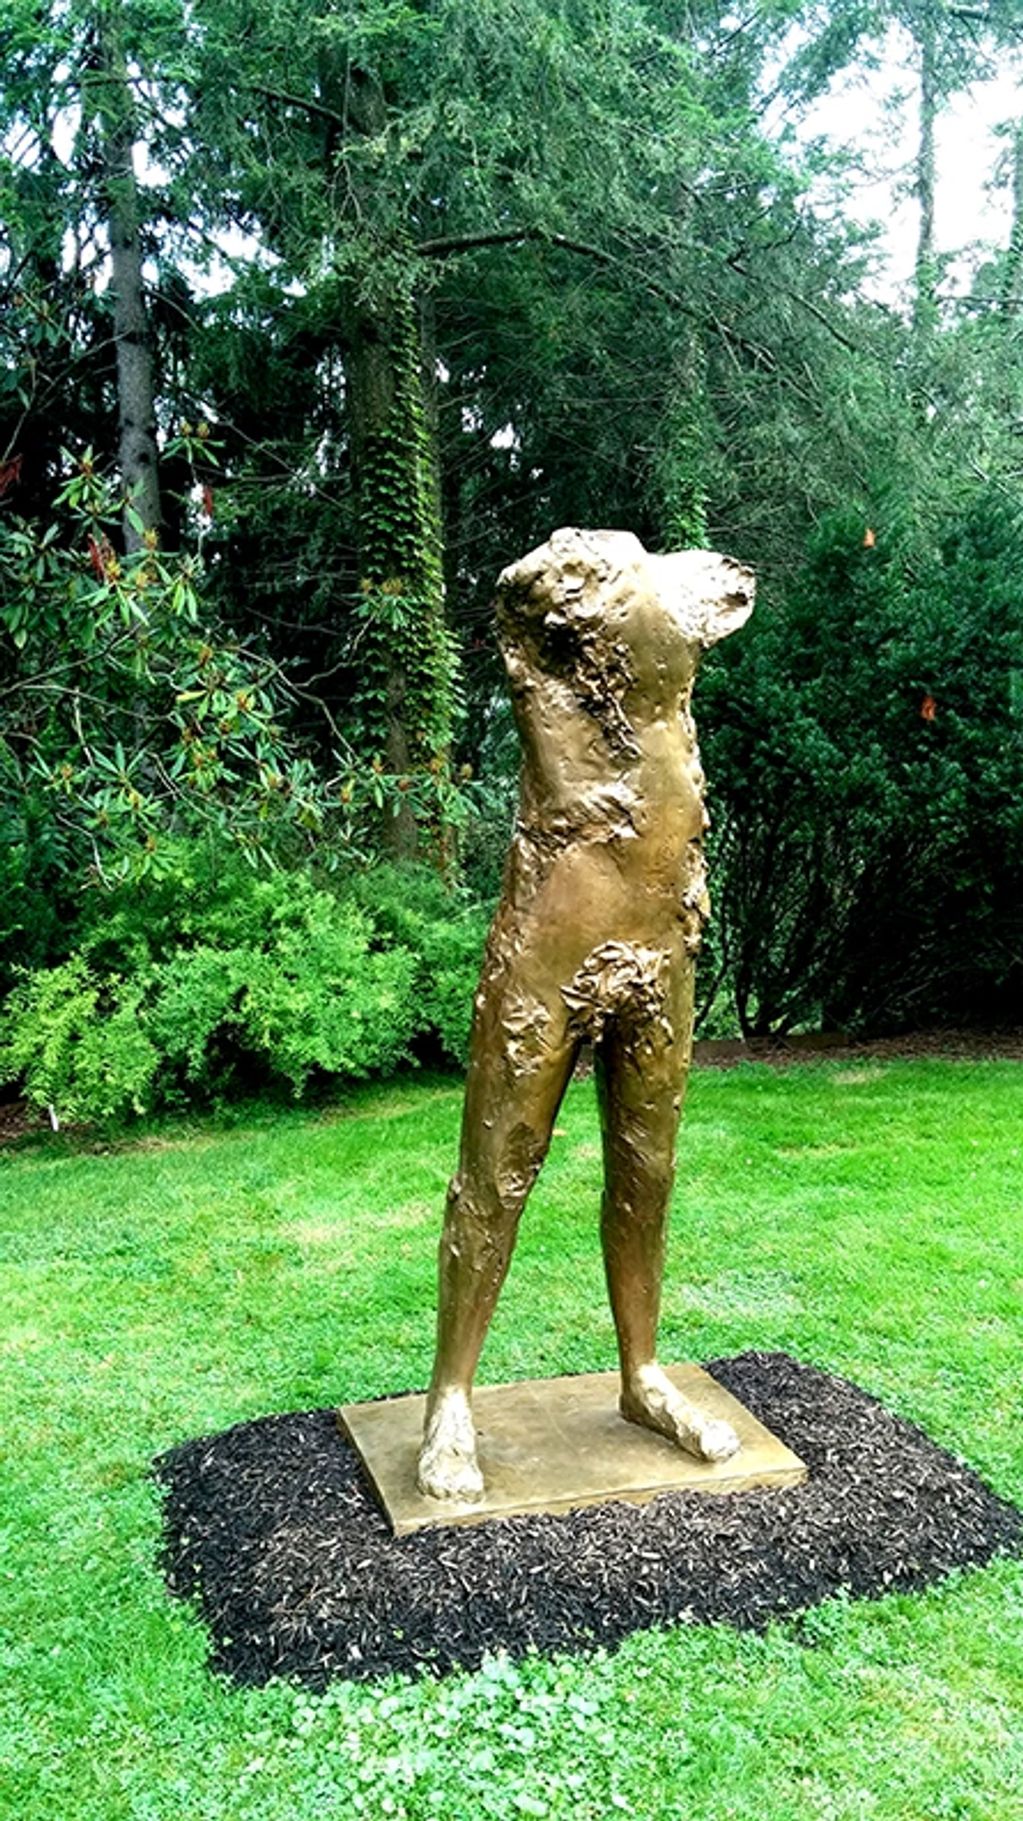 Ed Smith, "Amazon" unique bronze sculpture, Greenwood Gardens, Shorthills, NJ